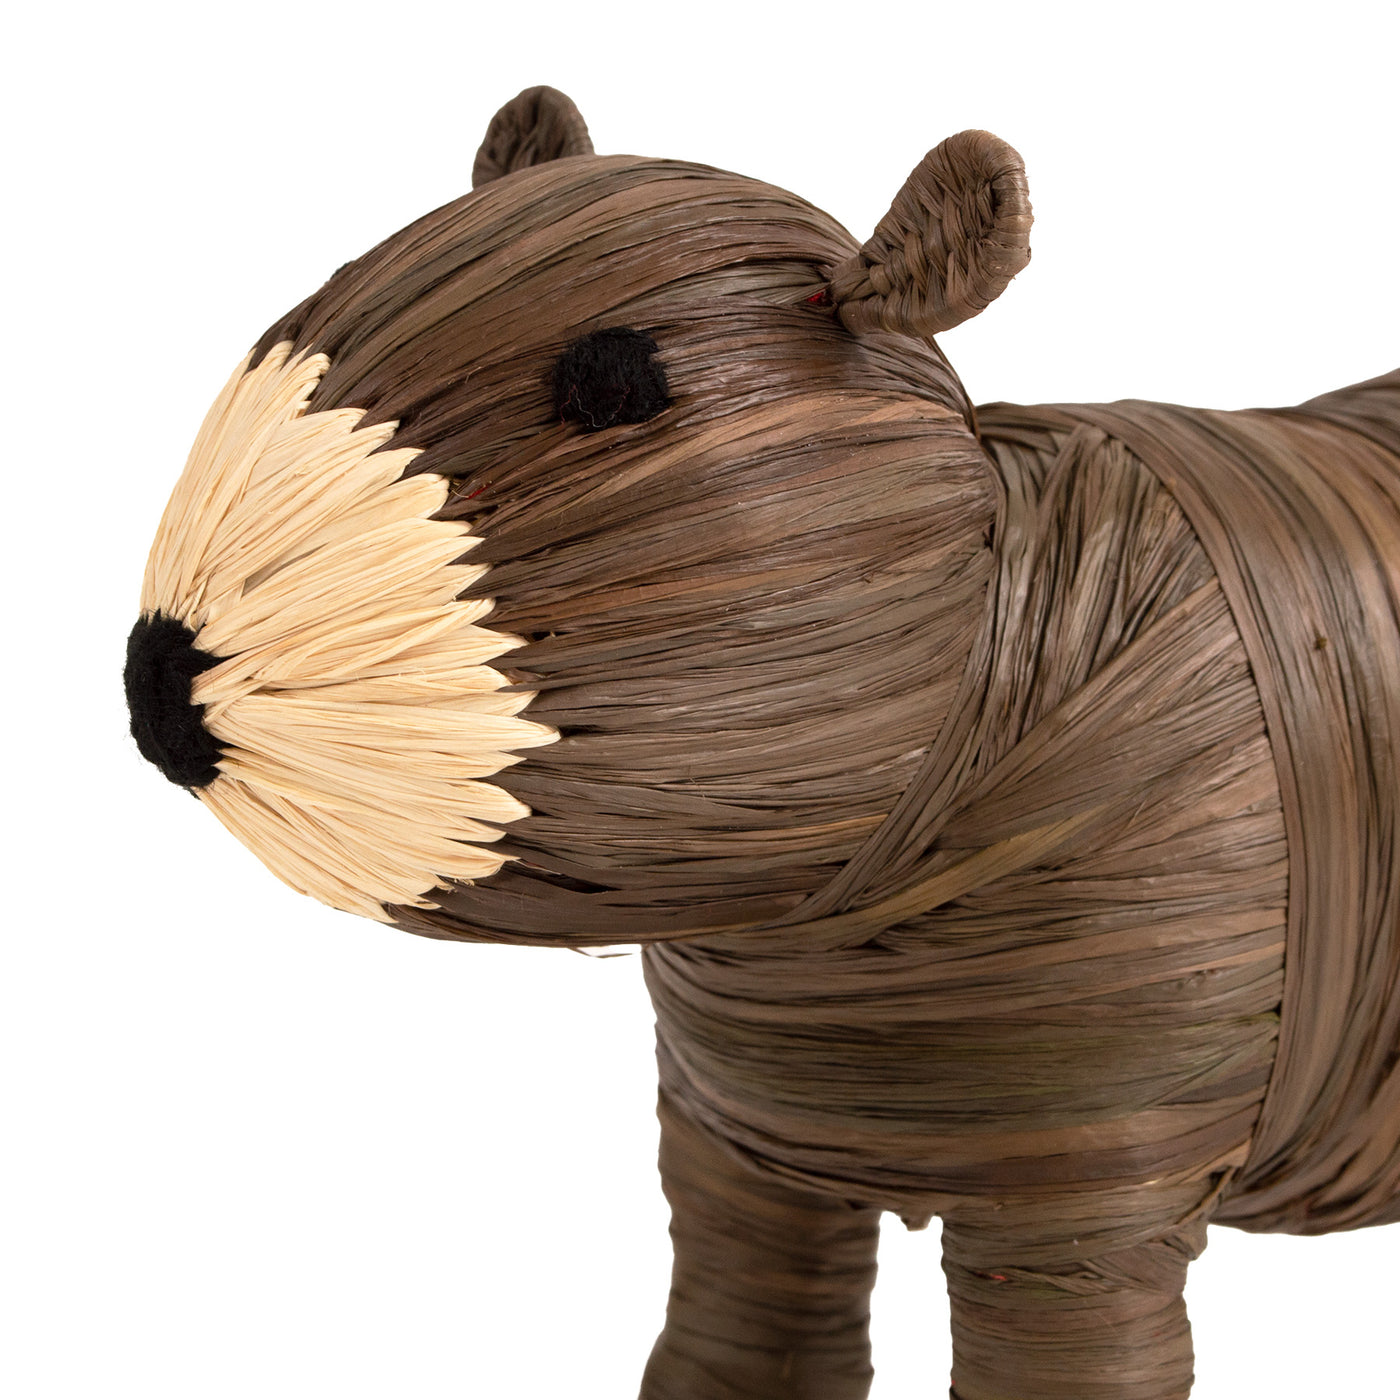 Woodland Figurine - 7" Bear